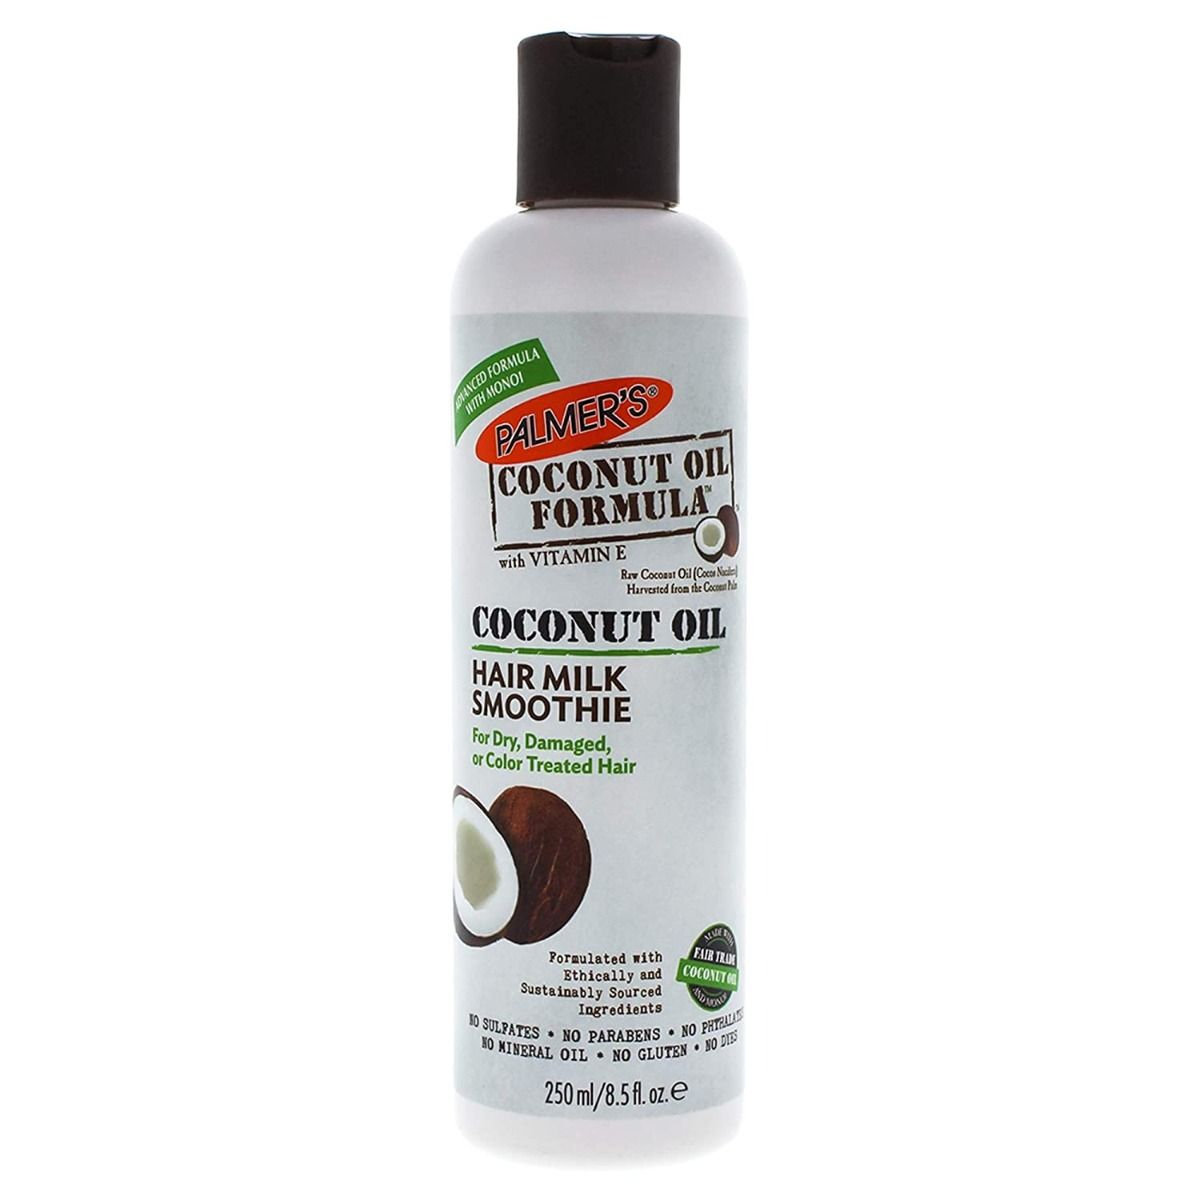 Palmer's Coconut Oil Hair Milk Smoothie 